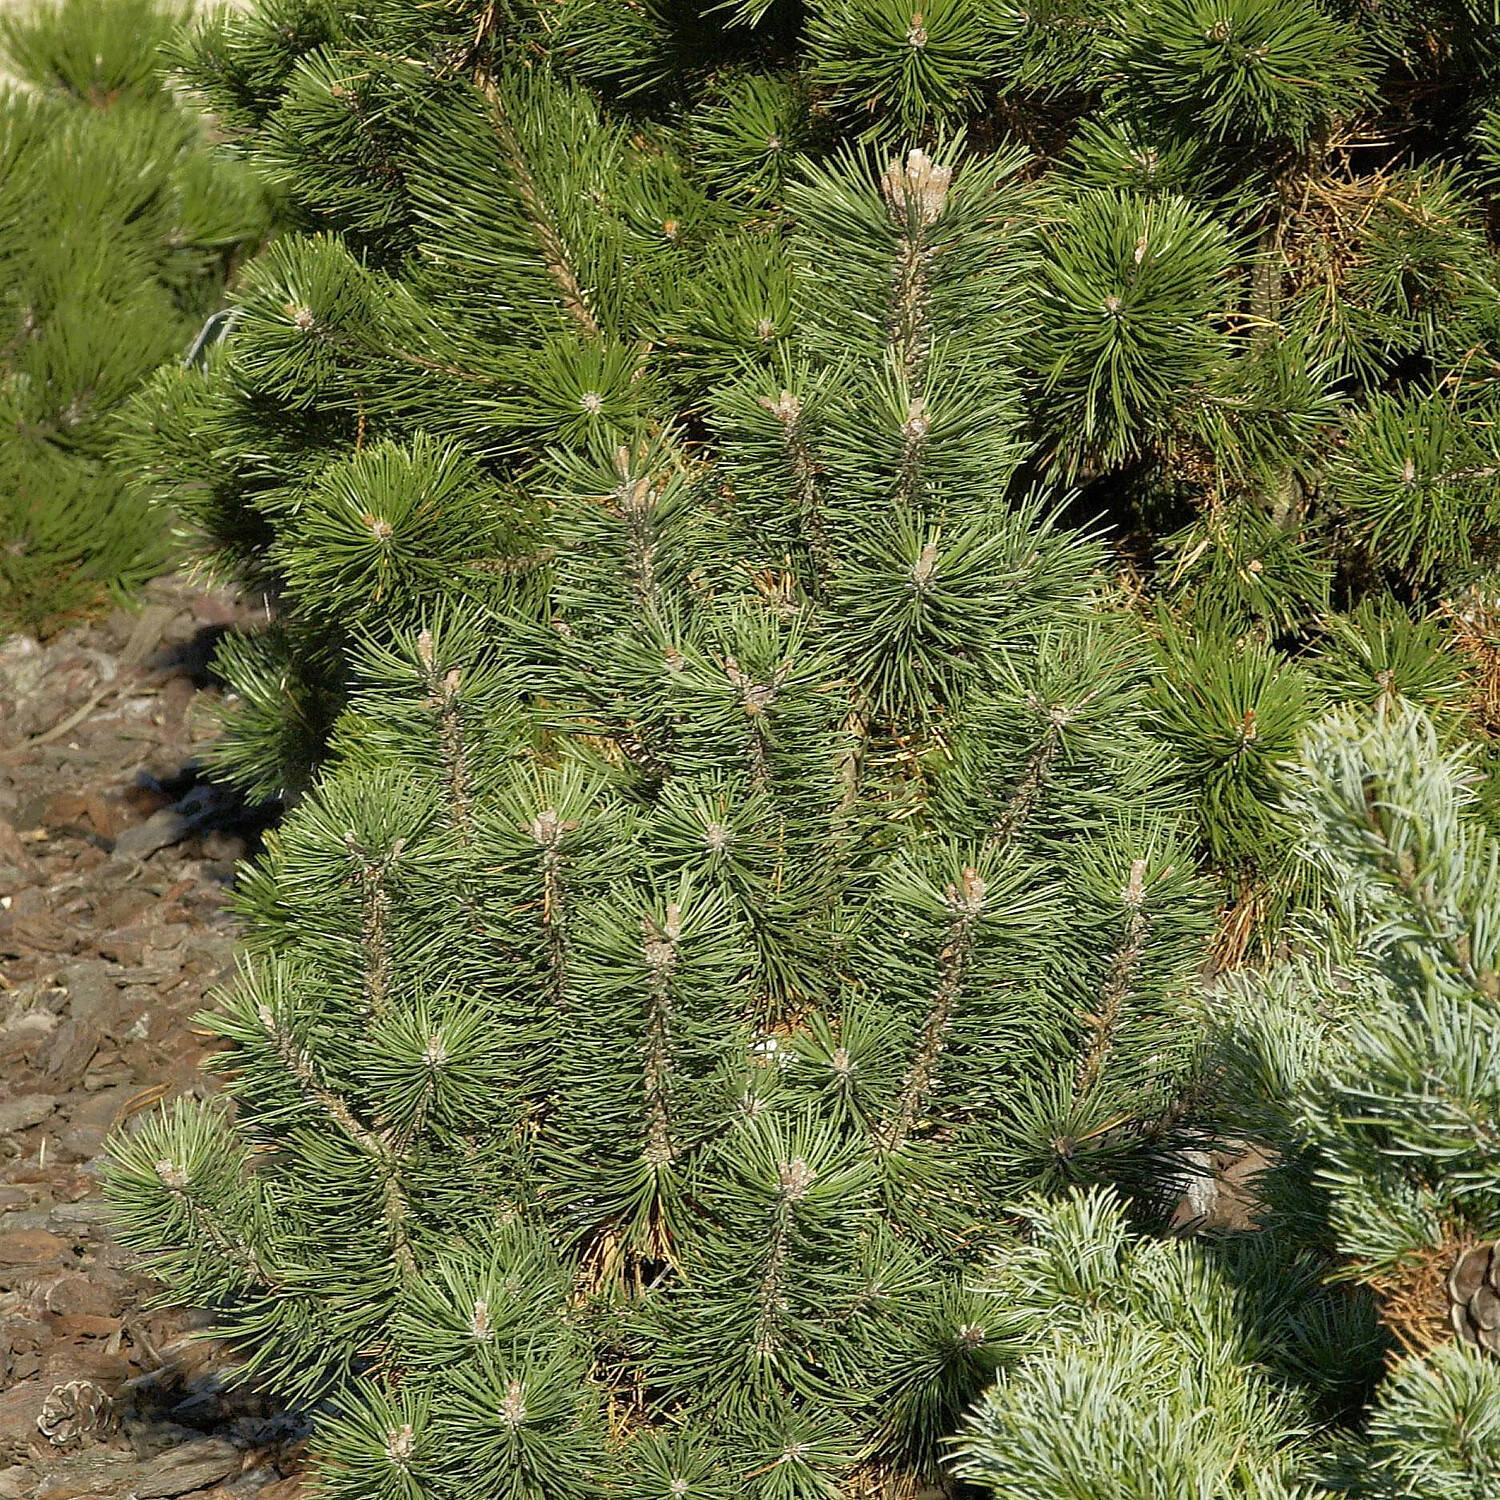  Berg-Kiefer, Latschenkiefer 'Columnaris' - Pinus mugo 'Columnaris'